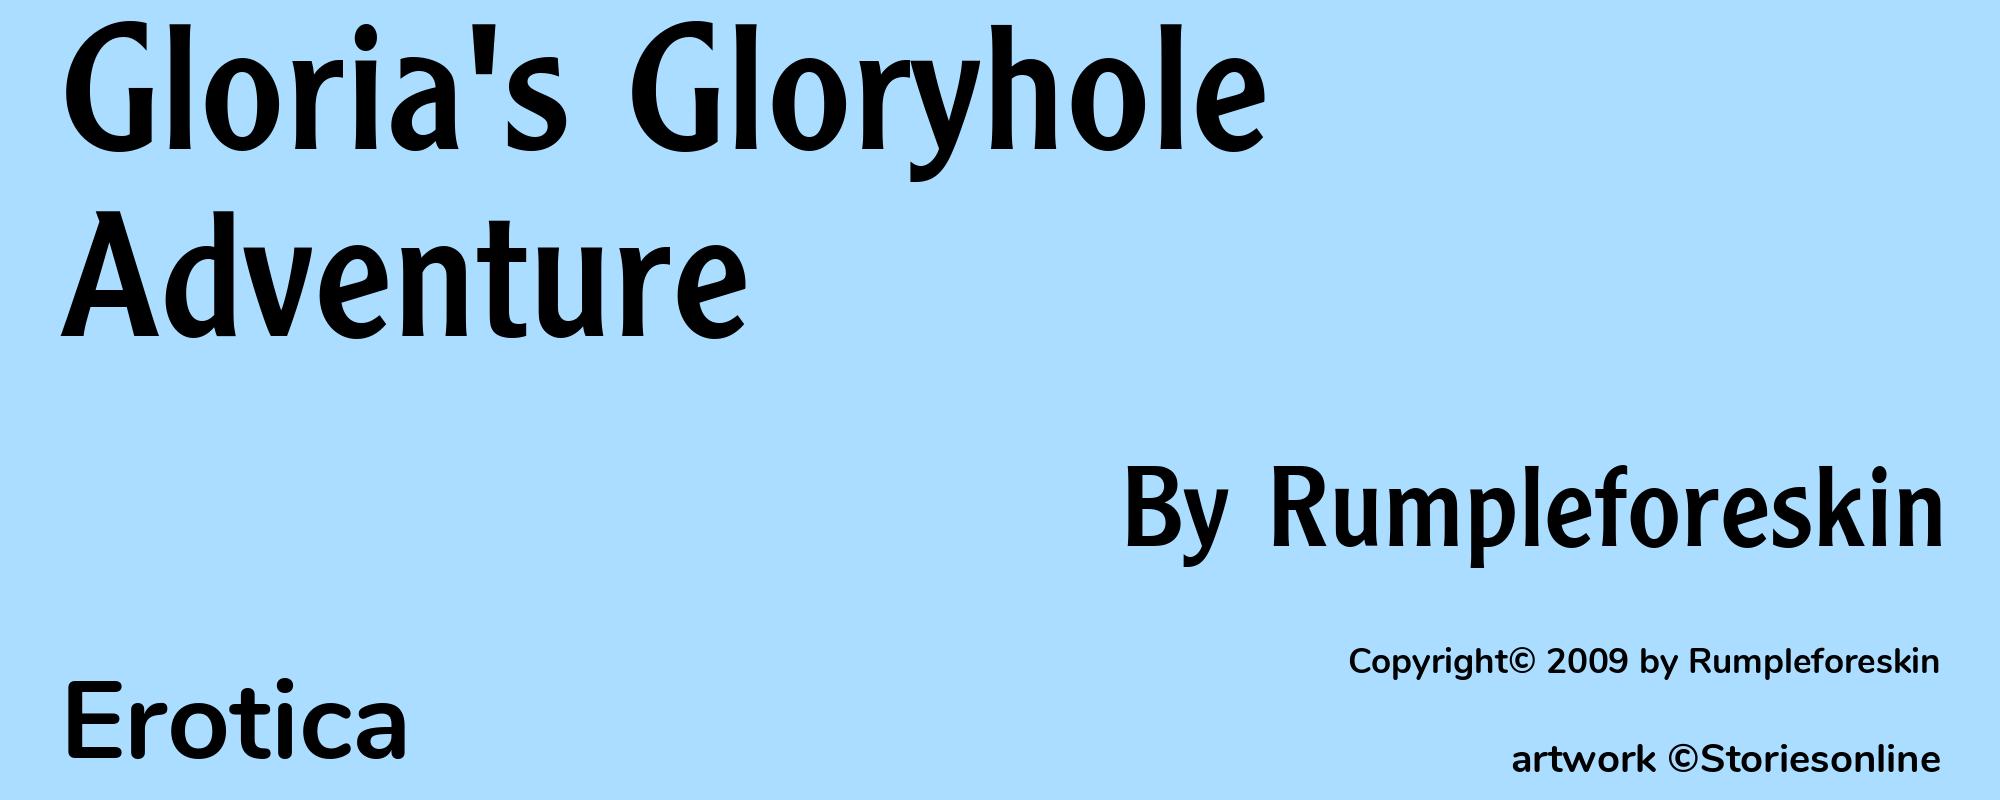 Gloria's Gloryhole Adventure - Cover